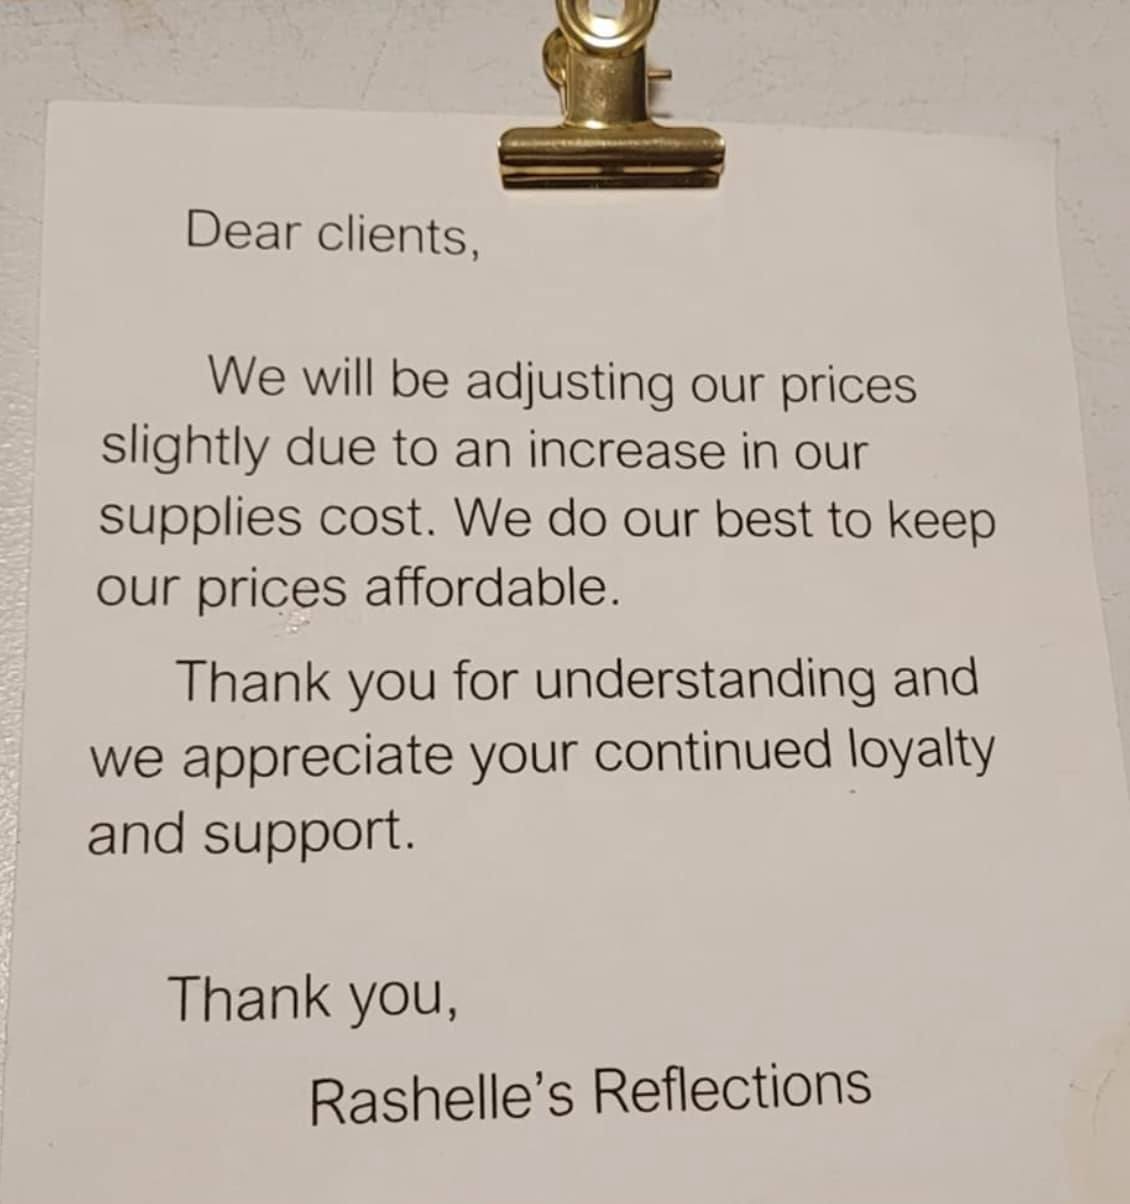 Rashelle's Reflections 139 N Water St, Loudonville Ohio 44842